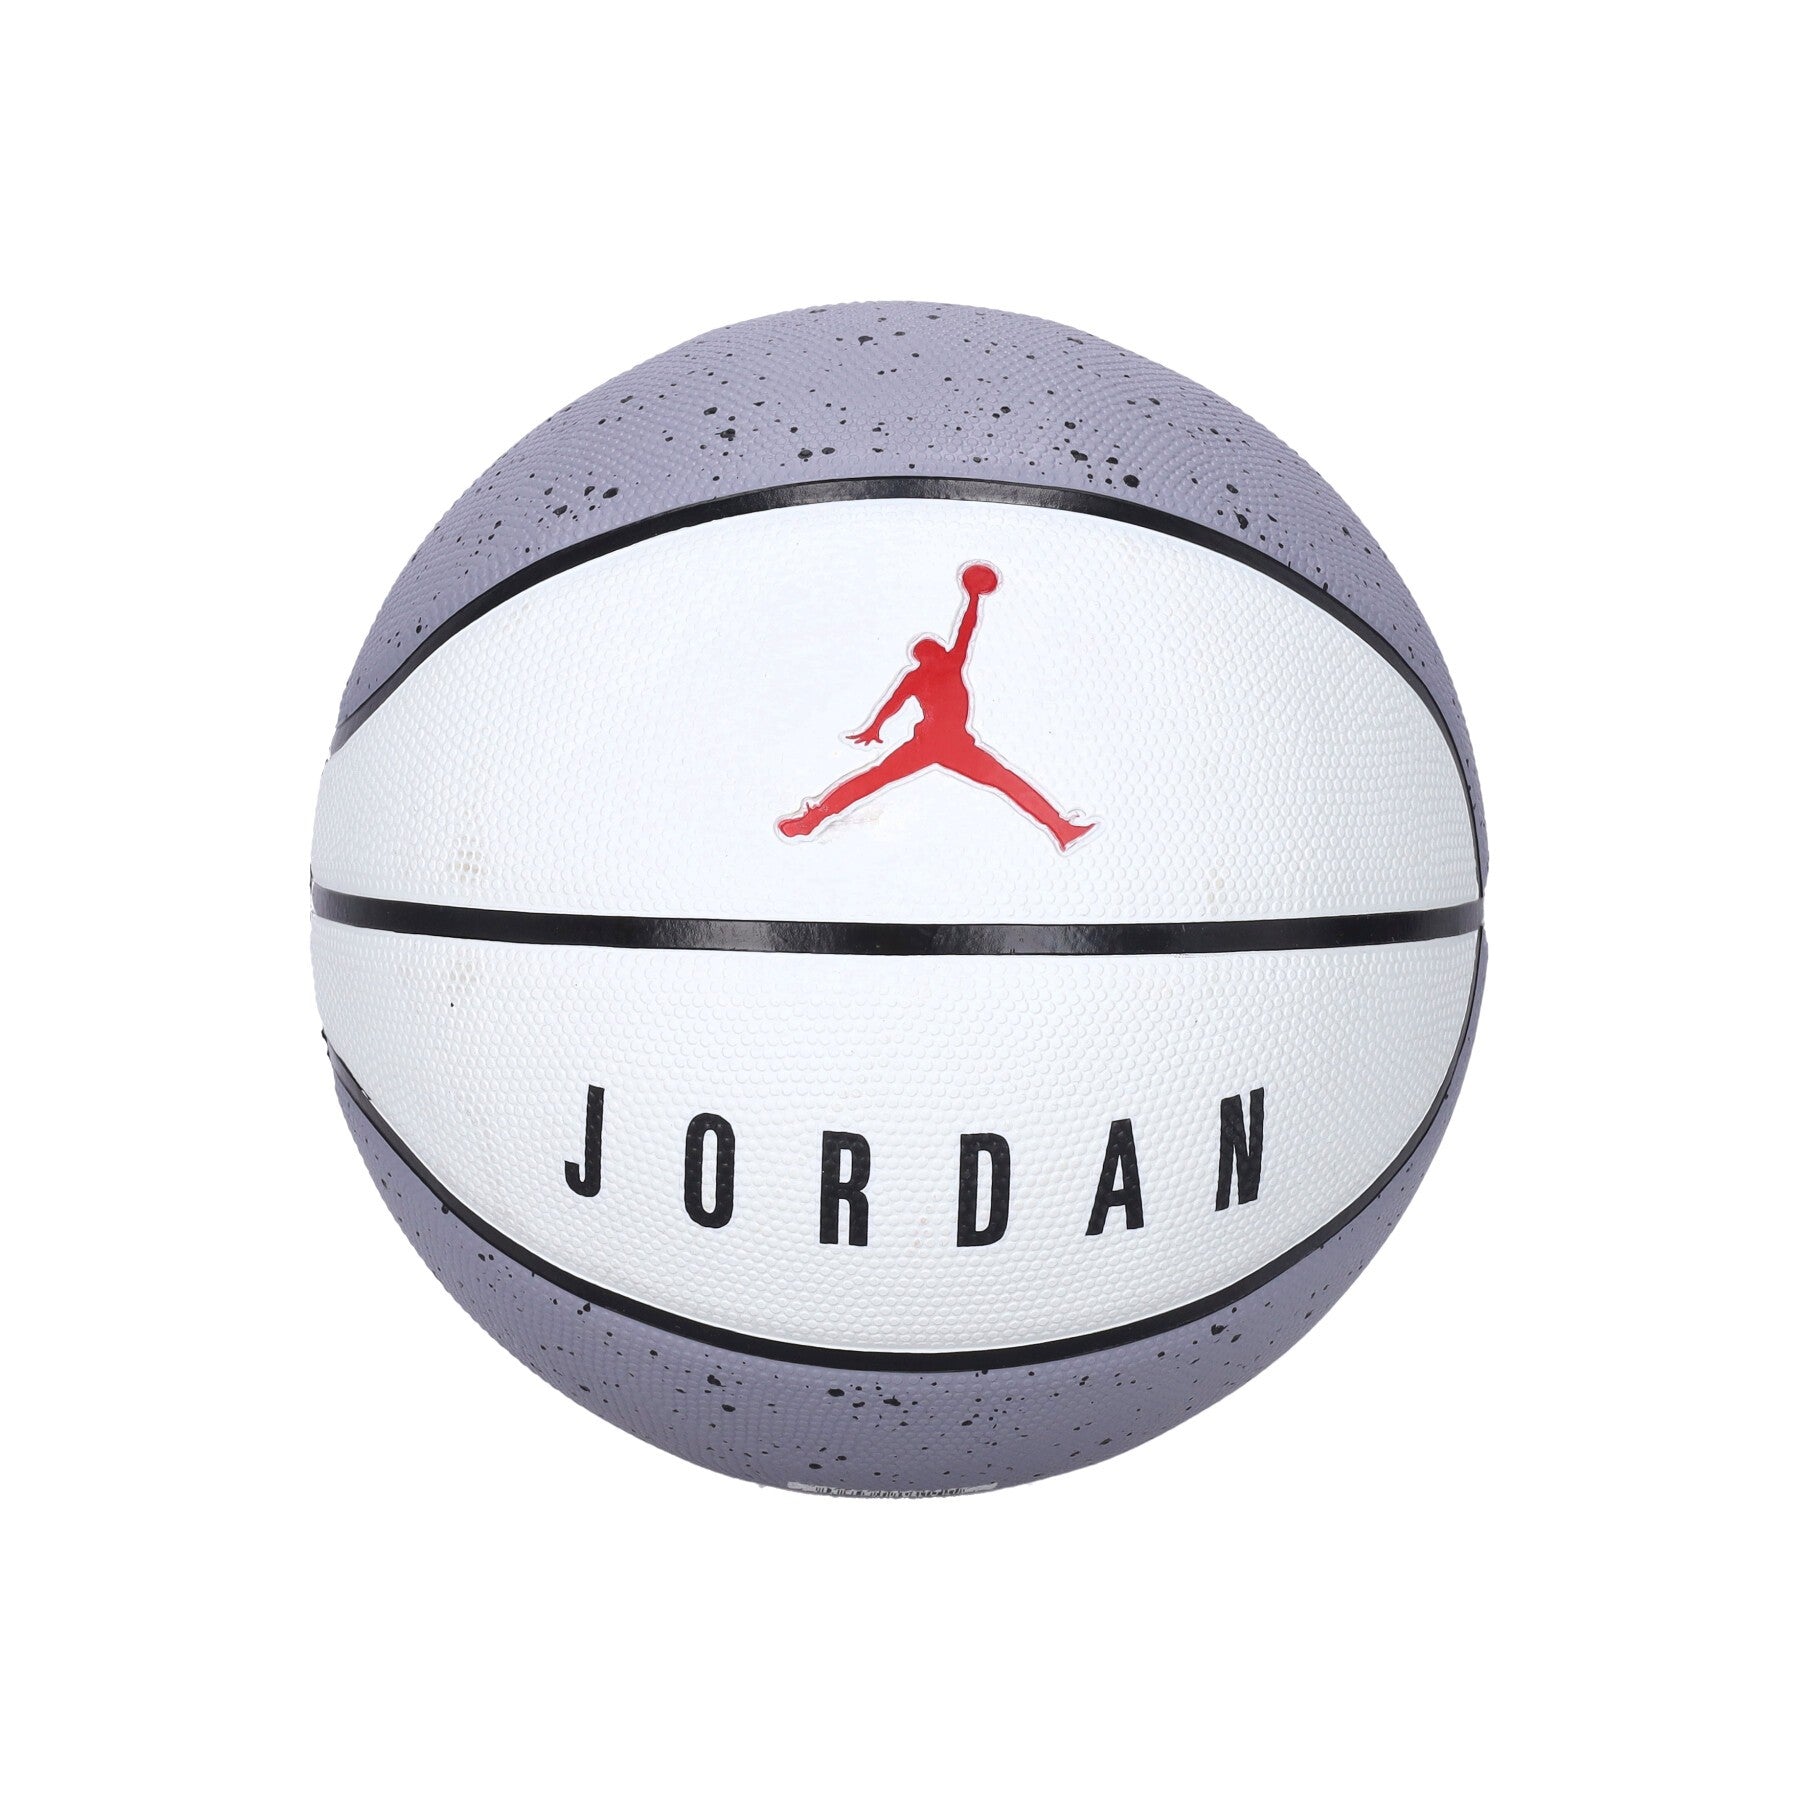 Jordan Nba, Pallone Uomo Playground Size 7, 